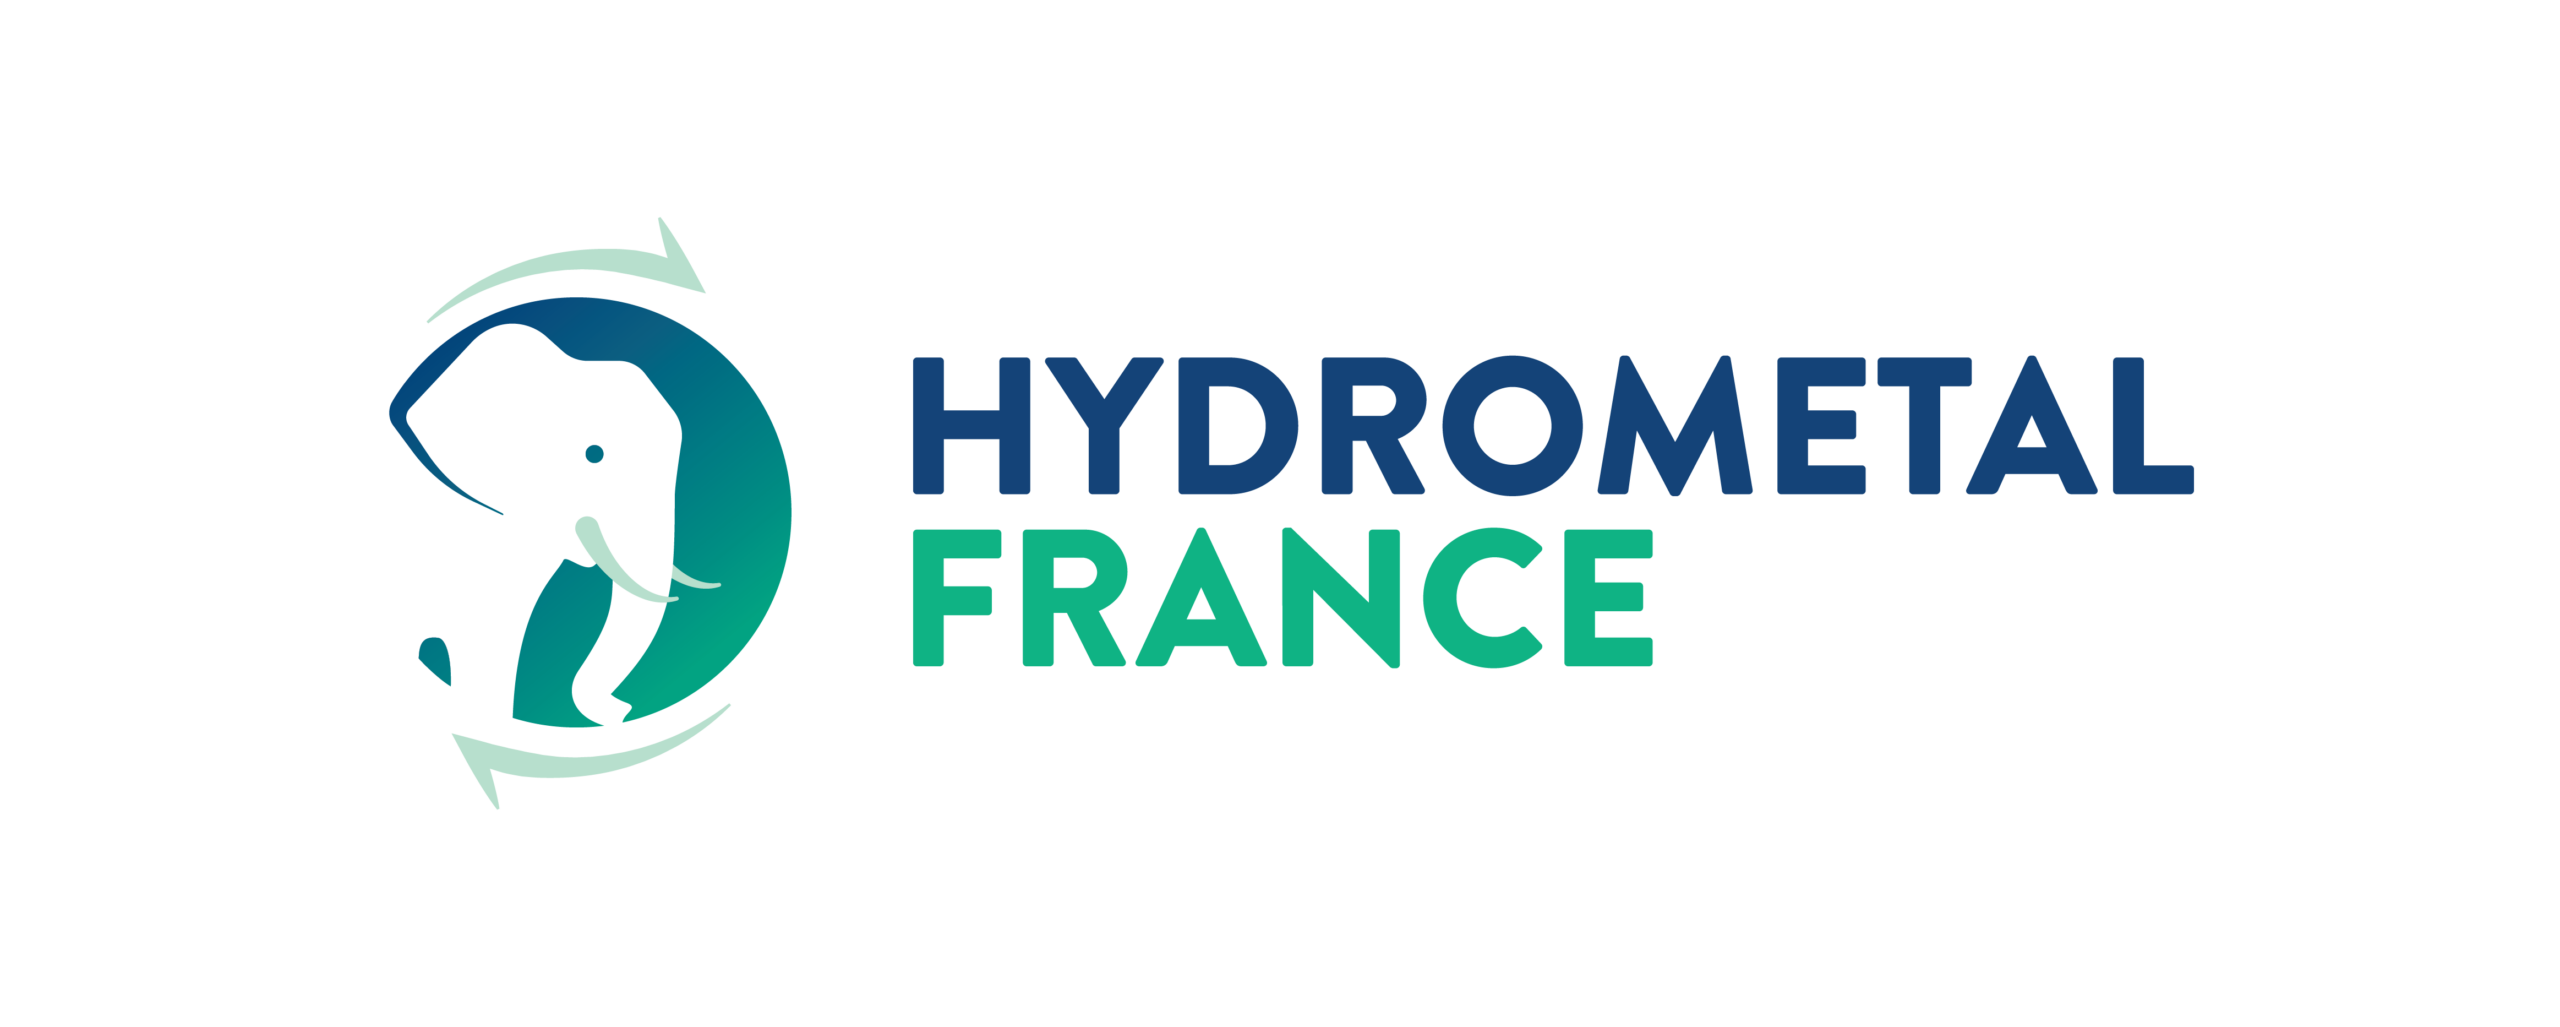 Hydrometal France